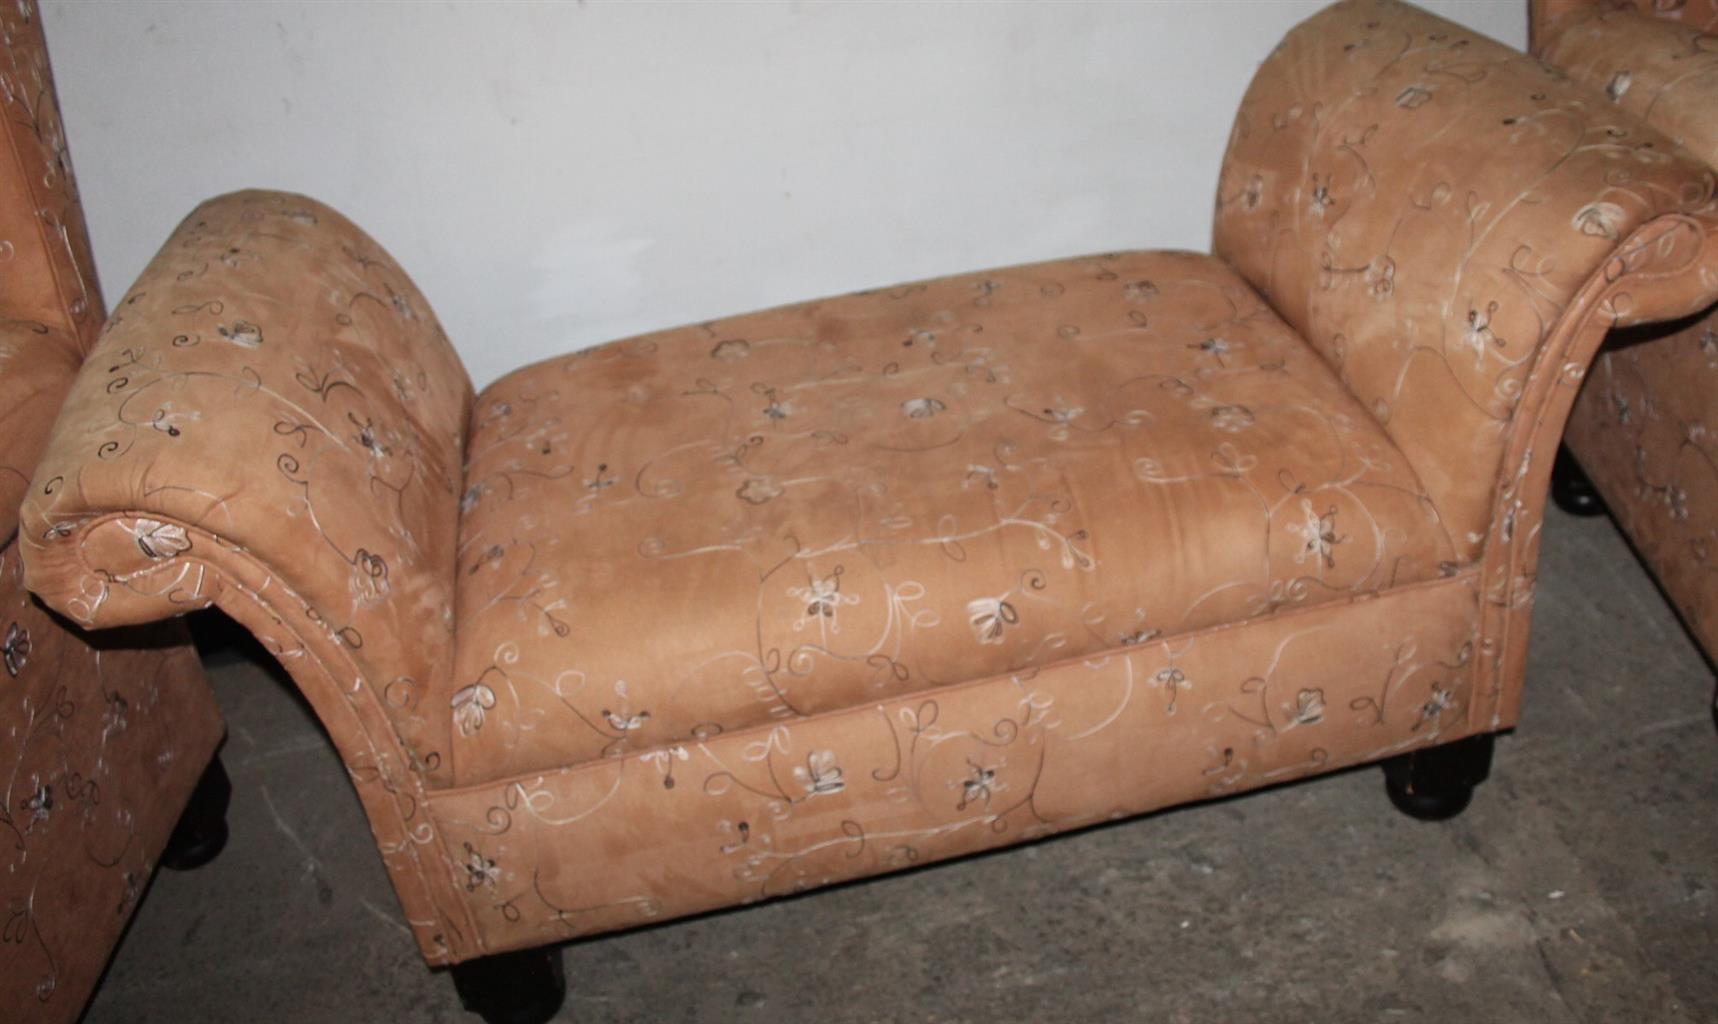 Cleopatra chair S027456c #Rosettenvillepawnshop